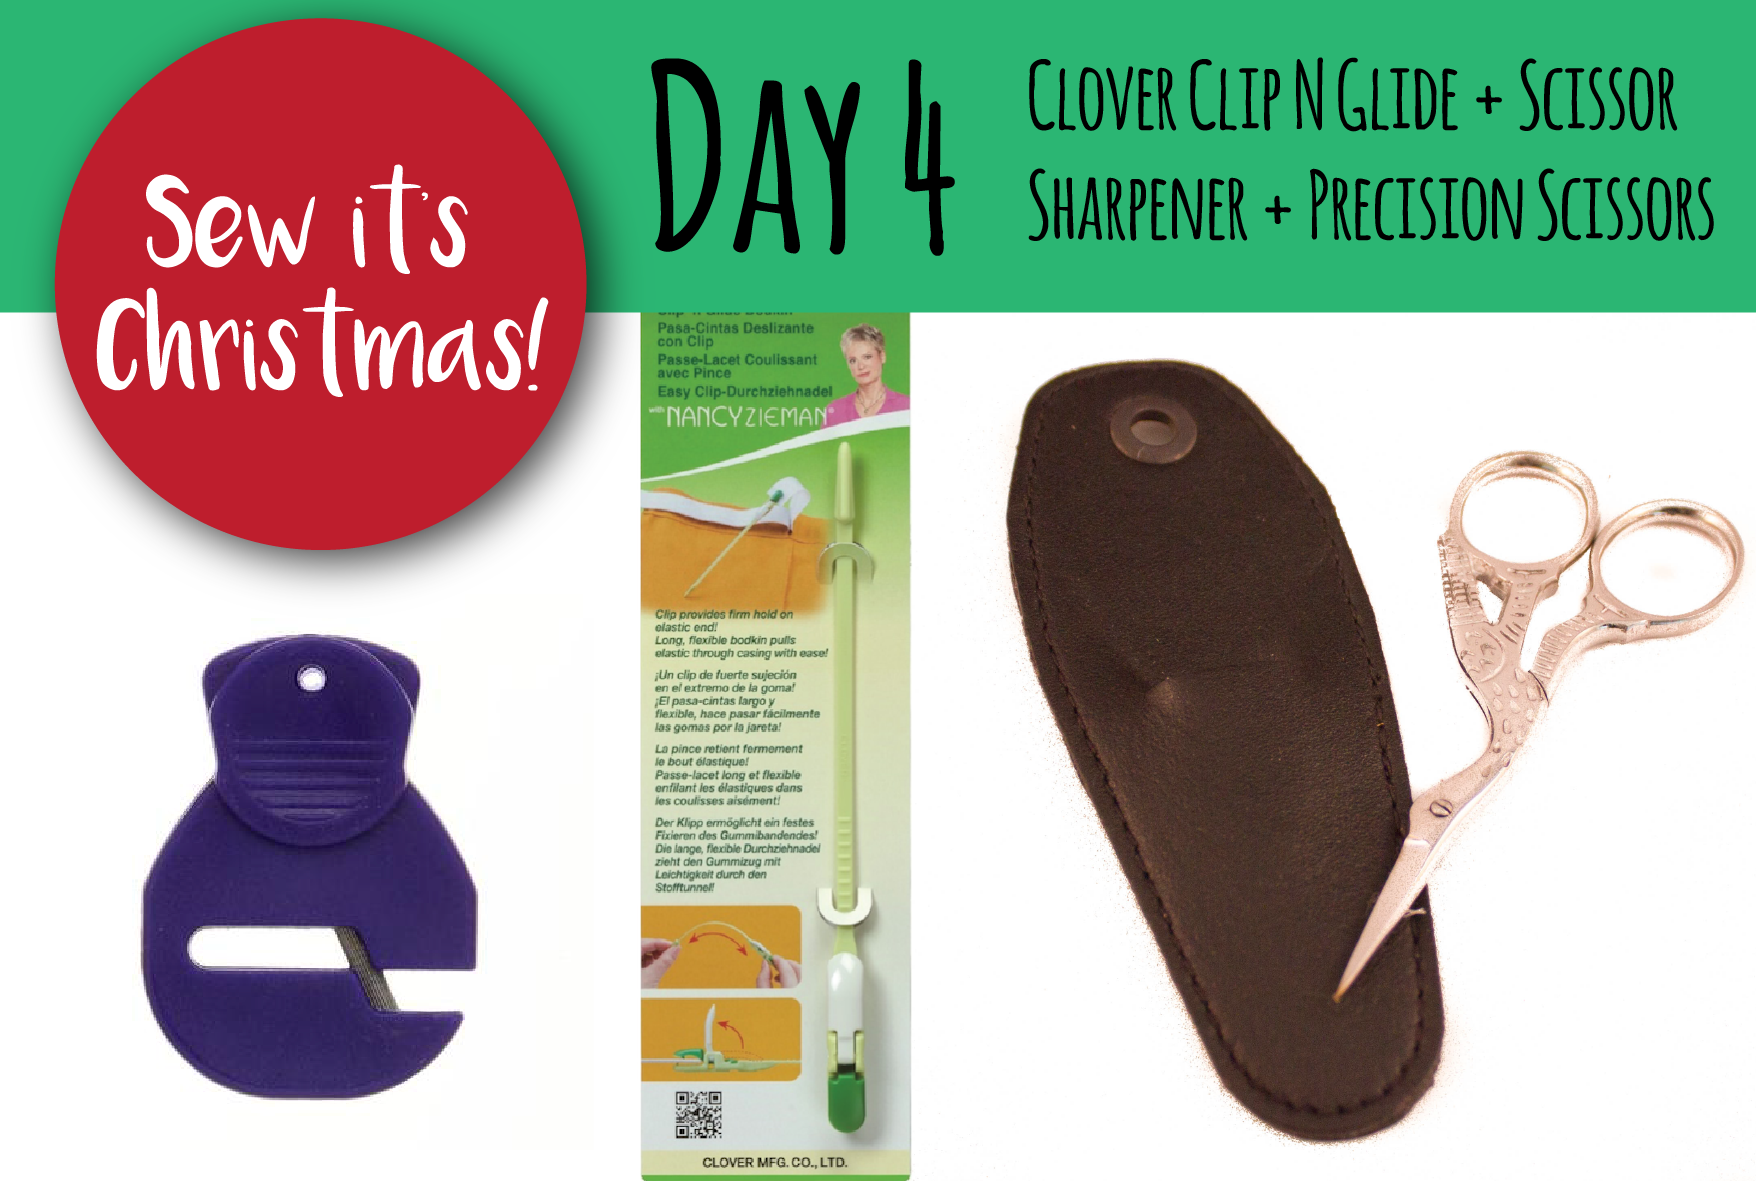 SEW IT'S CHRISTMAS - Day 4: Clover Clip N Glide + Scissors Sharpener + Precision Scissors